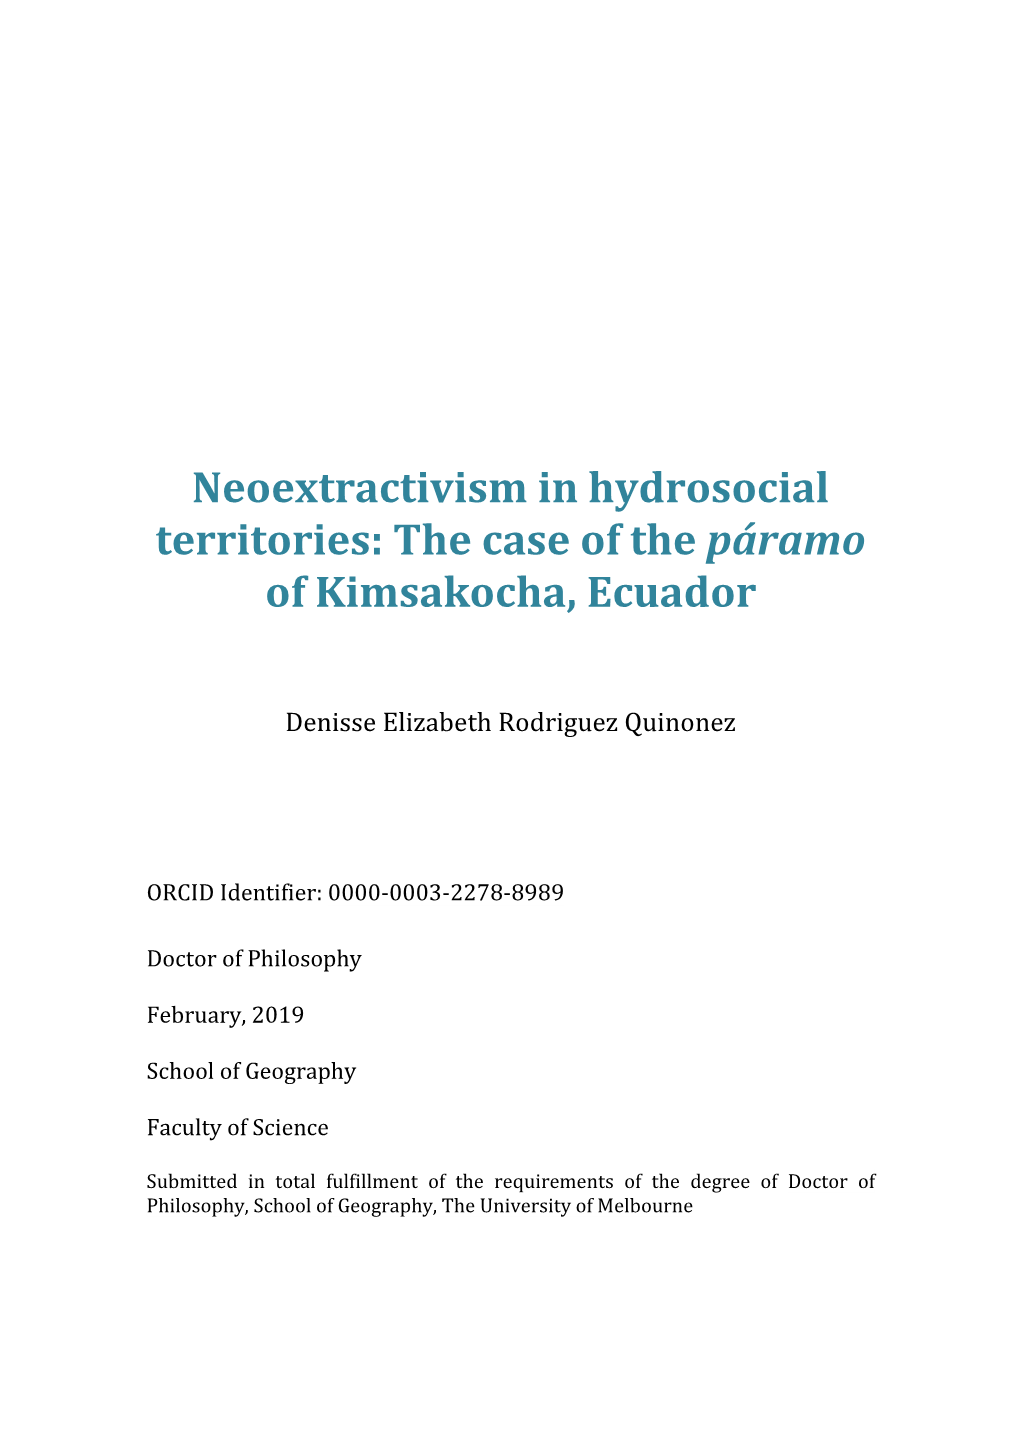 Neoextractivism in Hydrosocial Territories: the Case of the Páramo of Kimsakocha, Ecuador